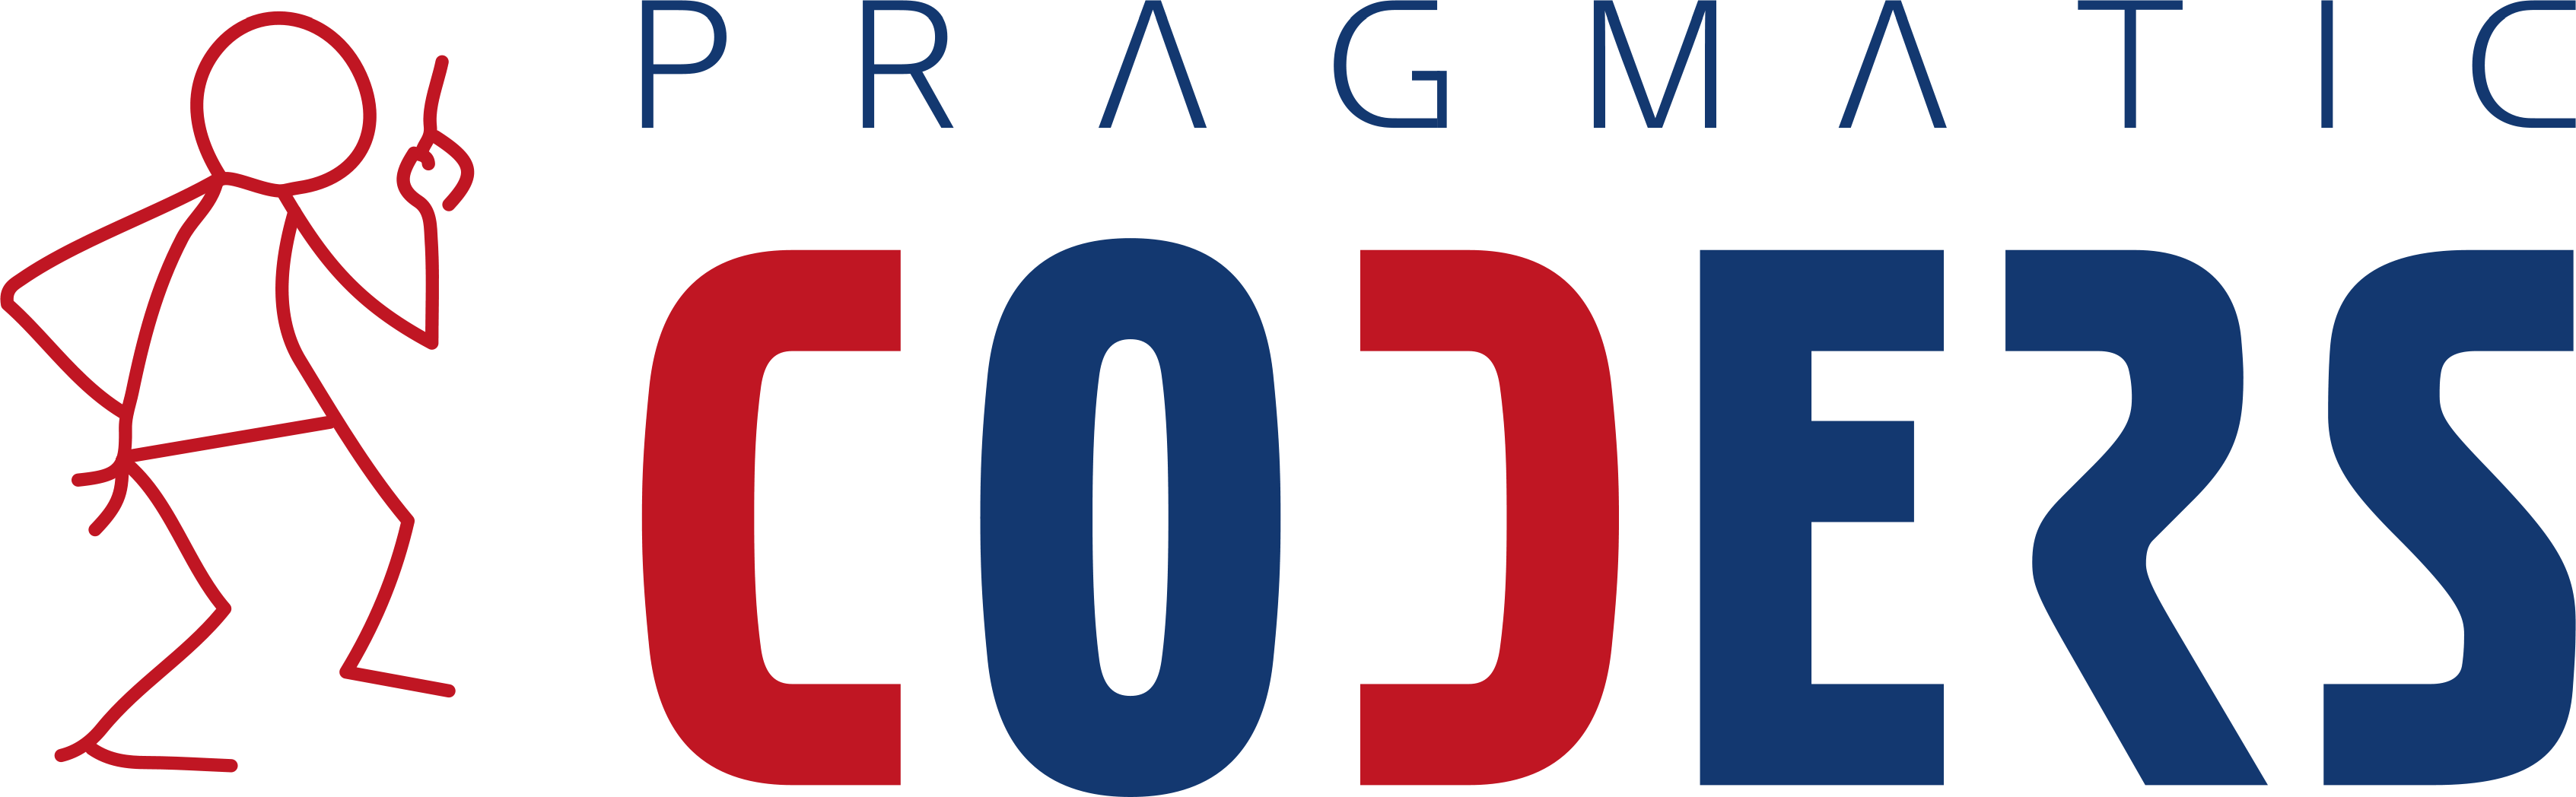 Logo firmy Pragmatic Coders